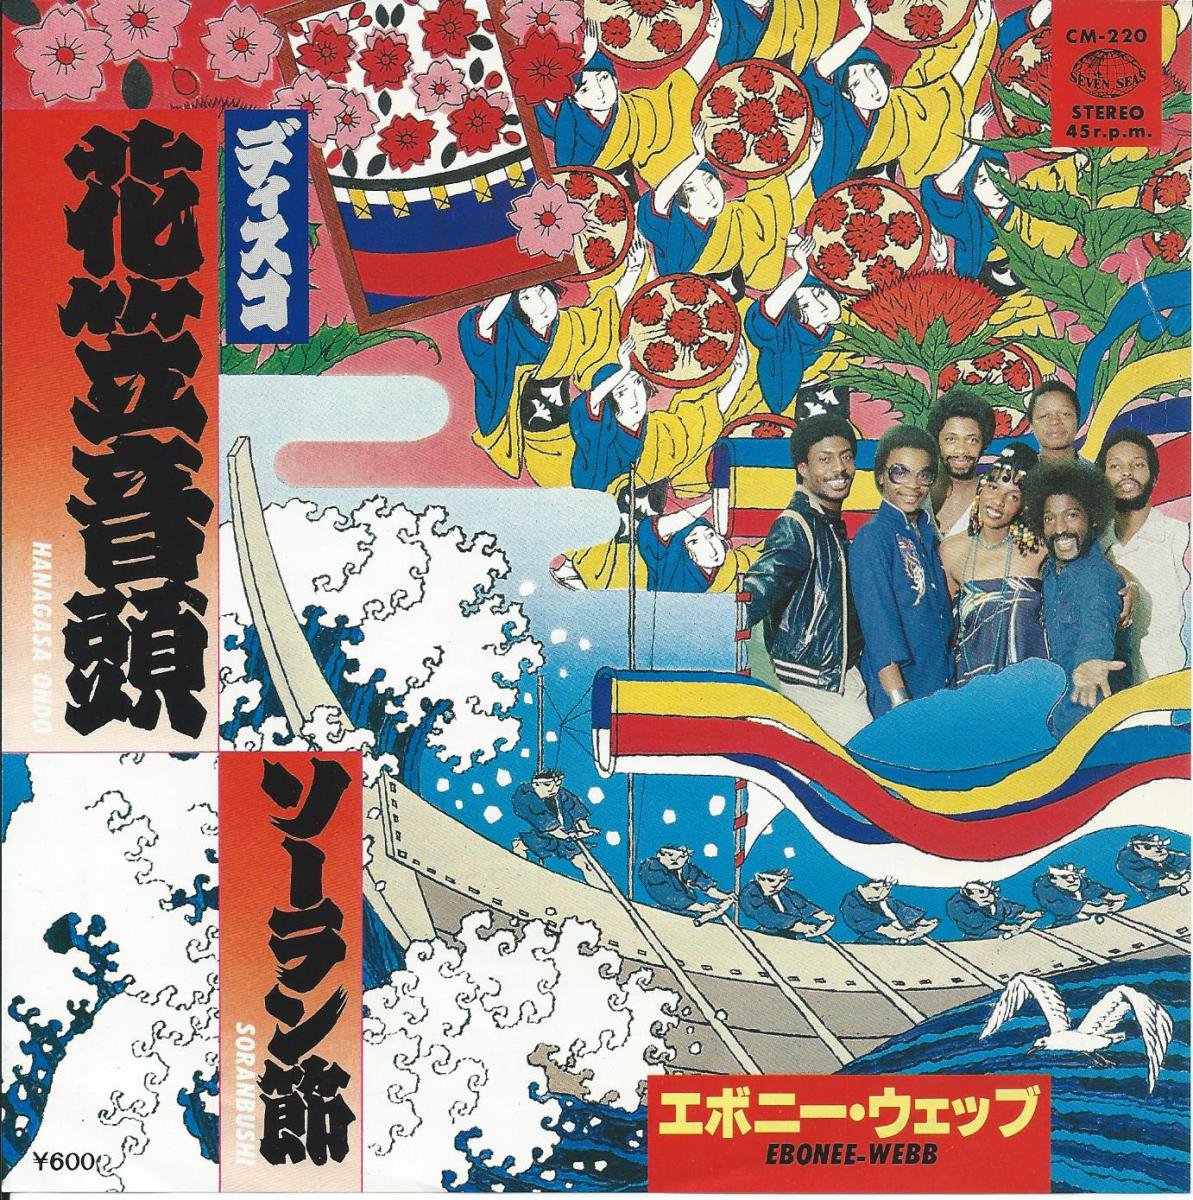 Japanese Disco 和ディスコ Hip Tank Records